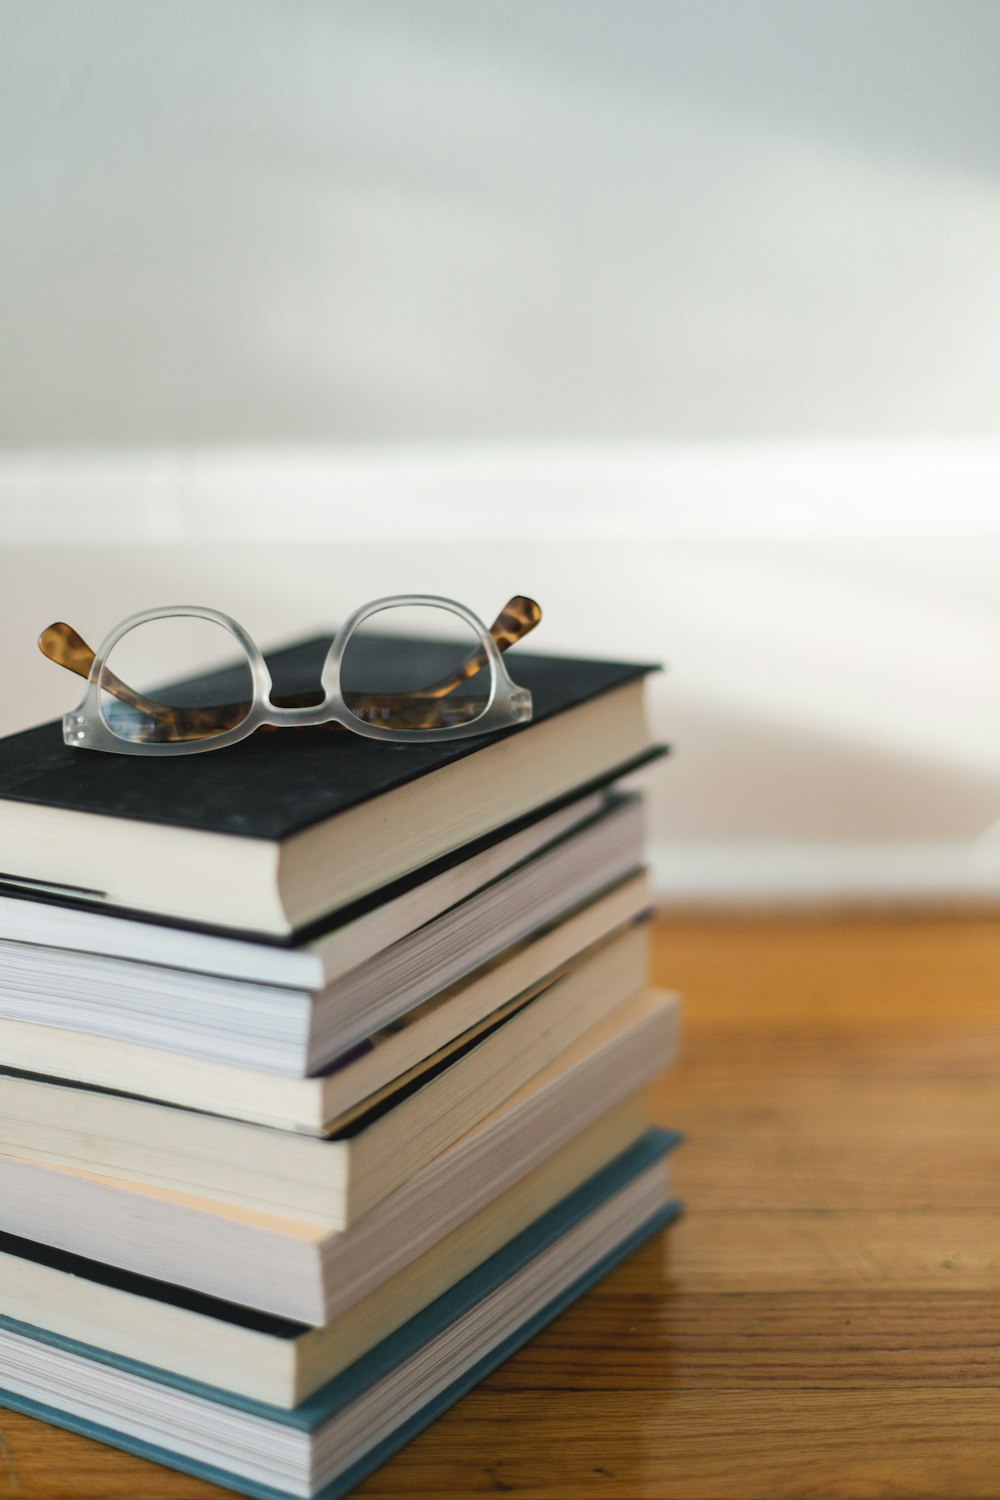 anteojos de montura transparente encima de una pila de libros